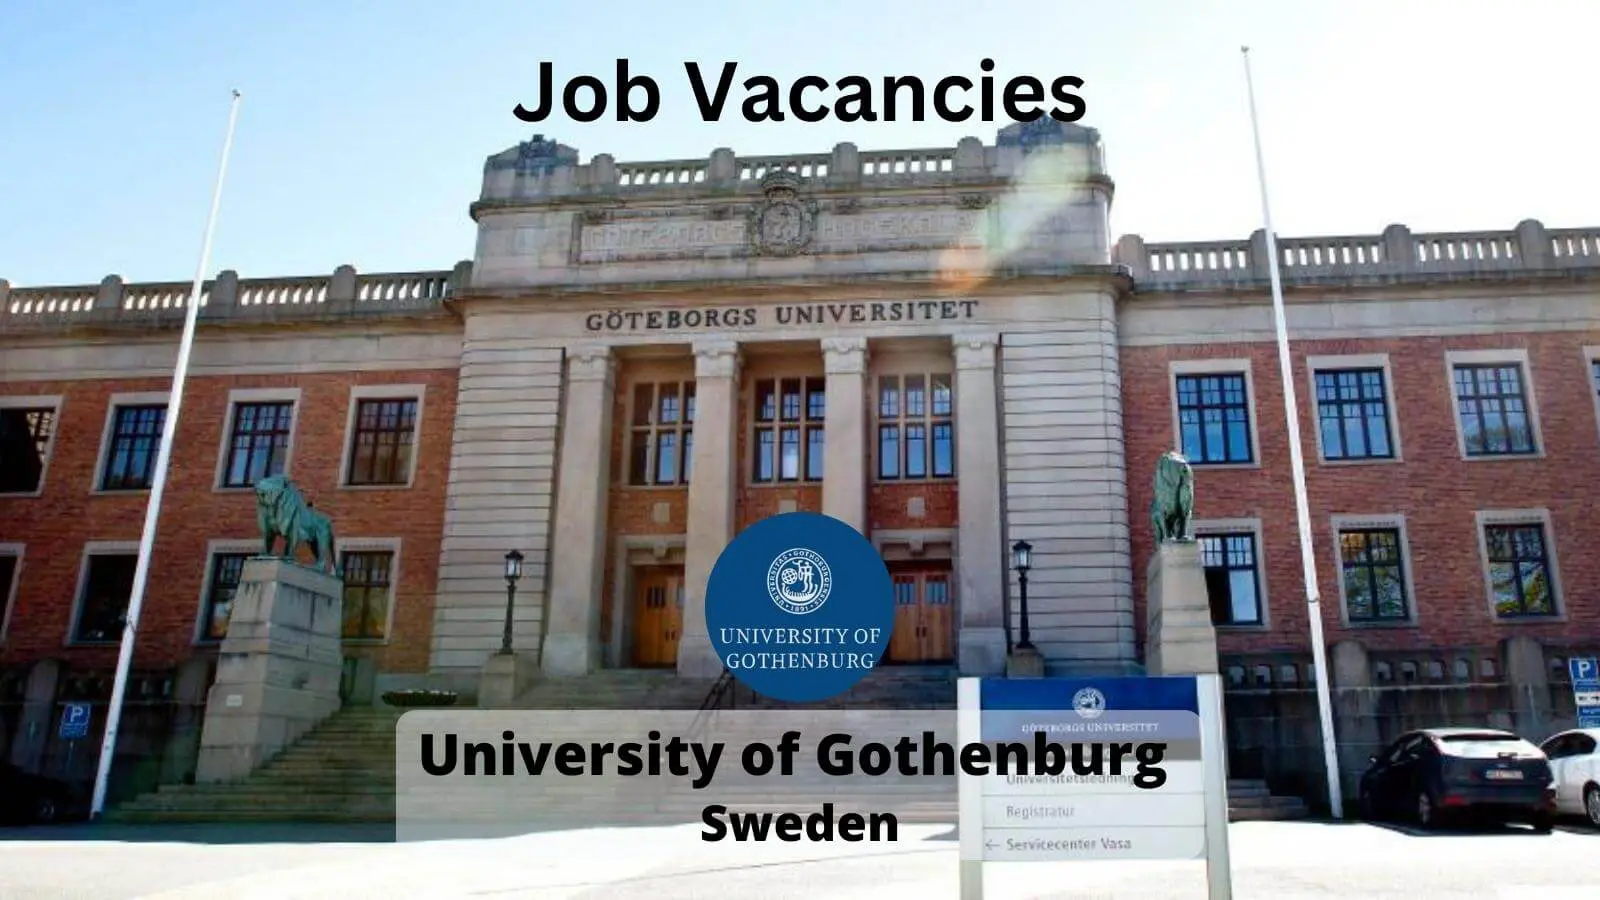 Job vacancies at University of Gothenburg